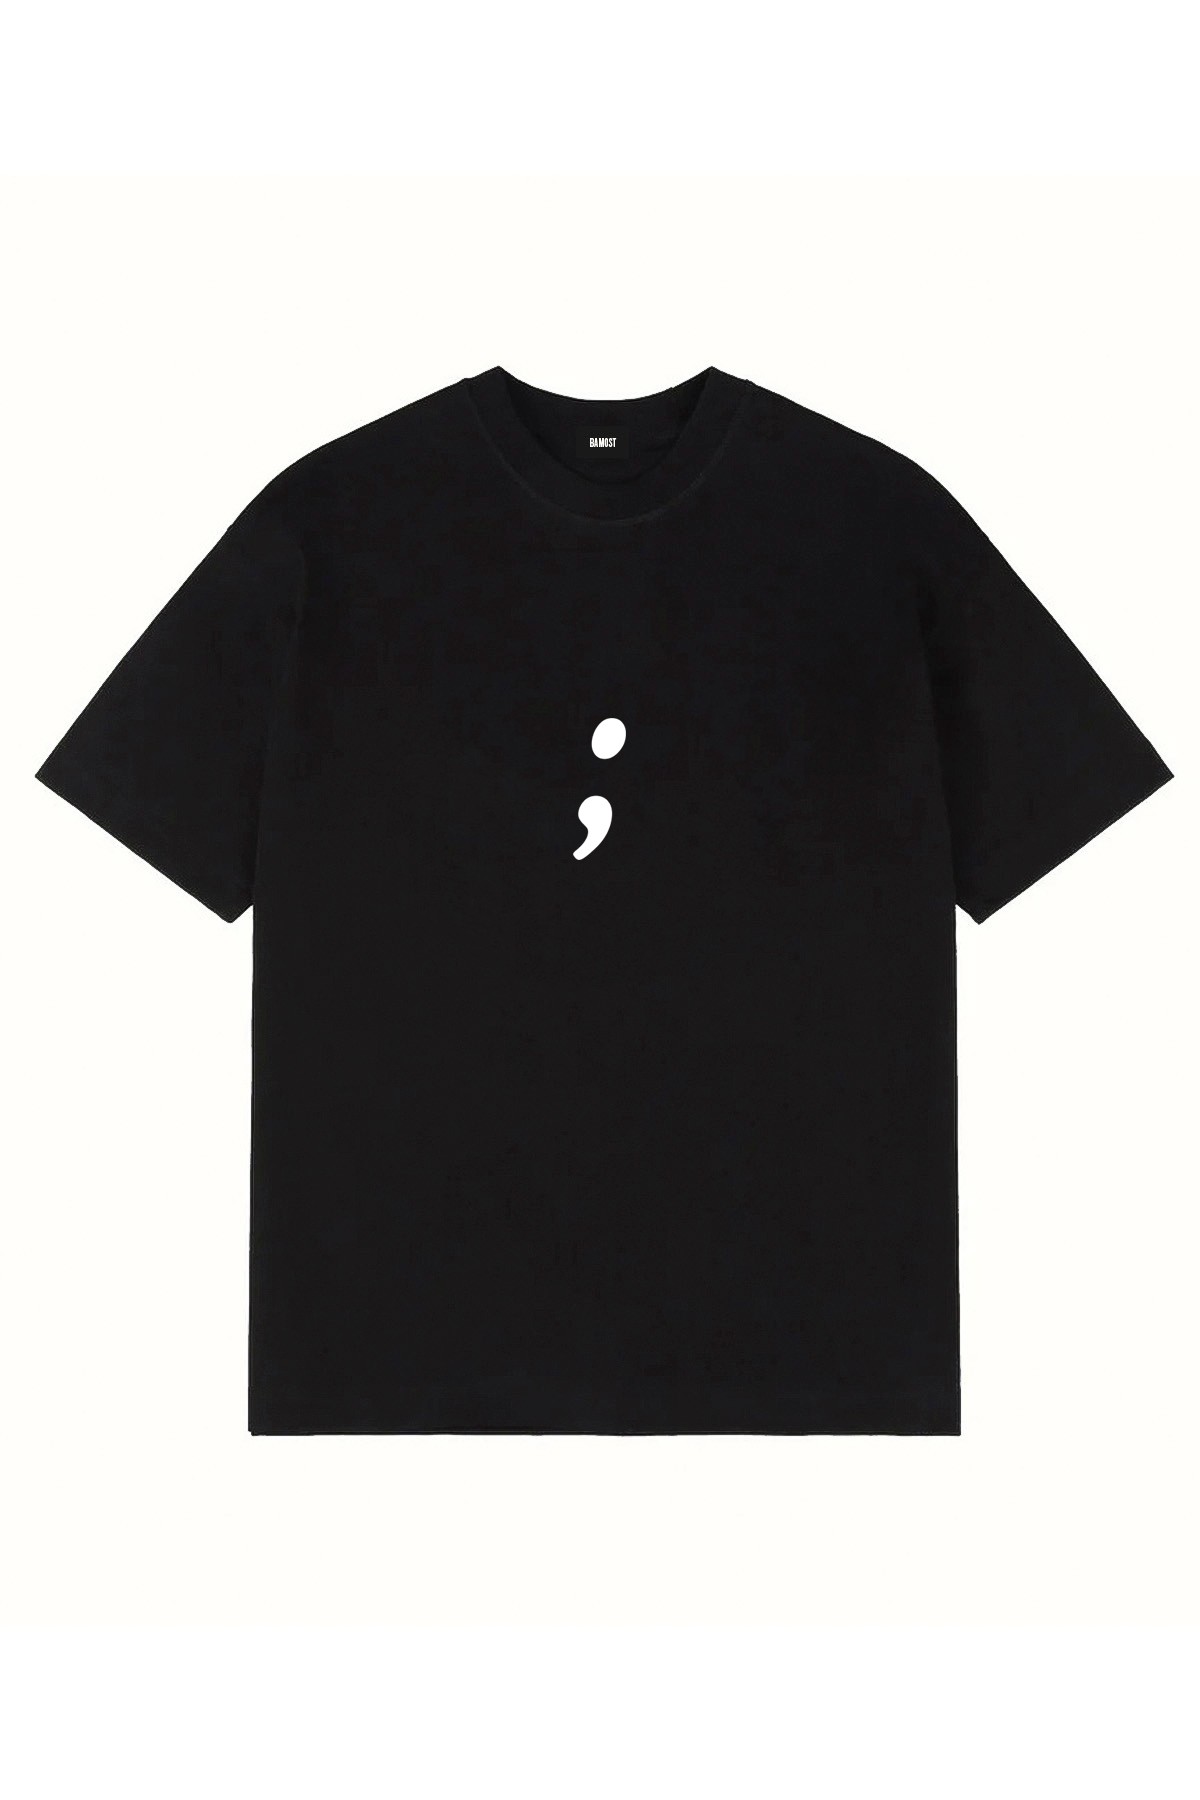 2018 - Oversize Printed T-Shirt